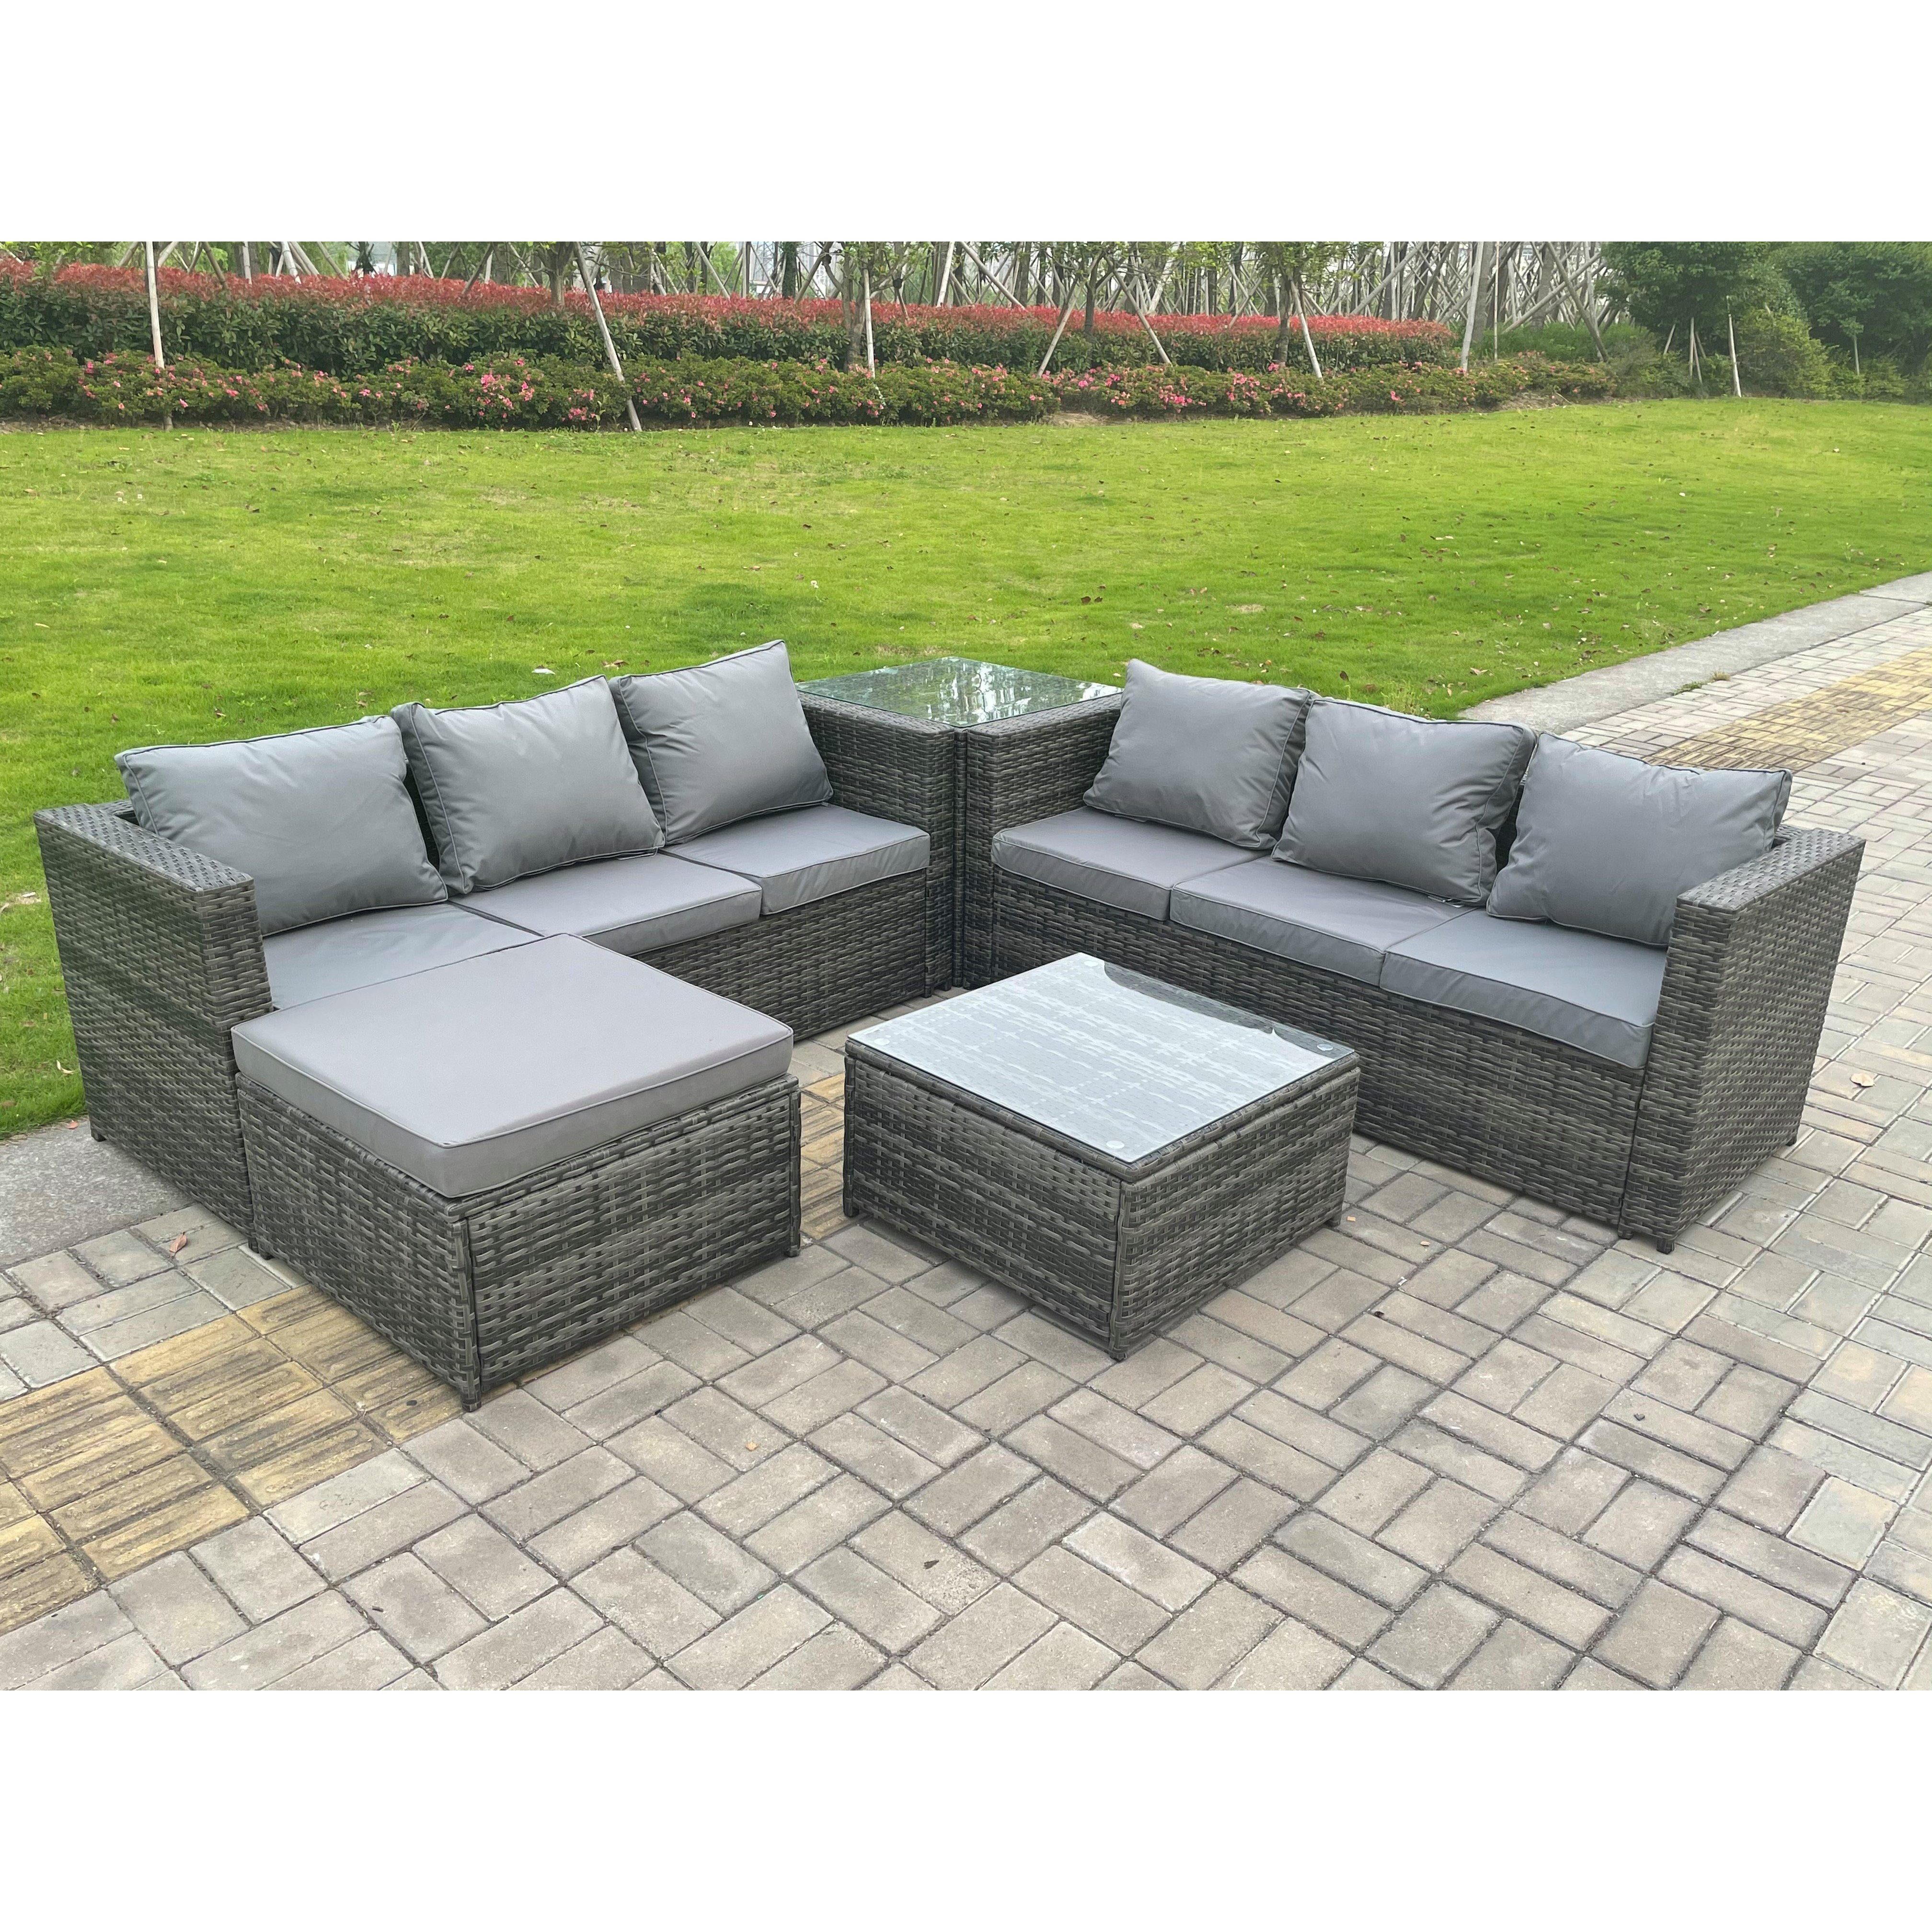 7 Seater Dark Mixed Grey Rattan Corner Sofa Outdoor Garden Furniture With 2 Coffee Table Footstool - image 1